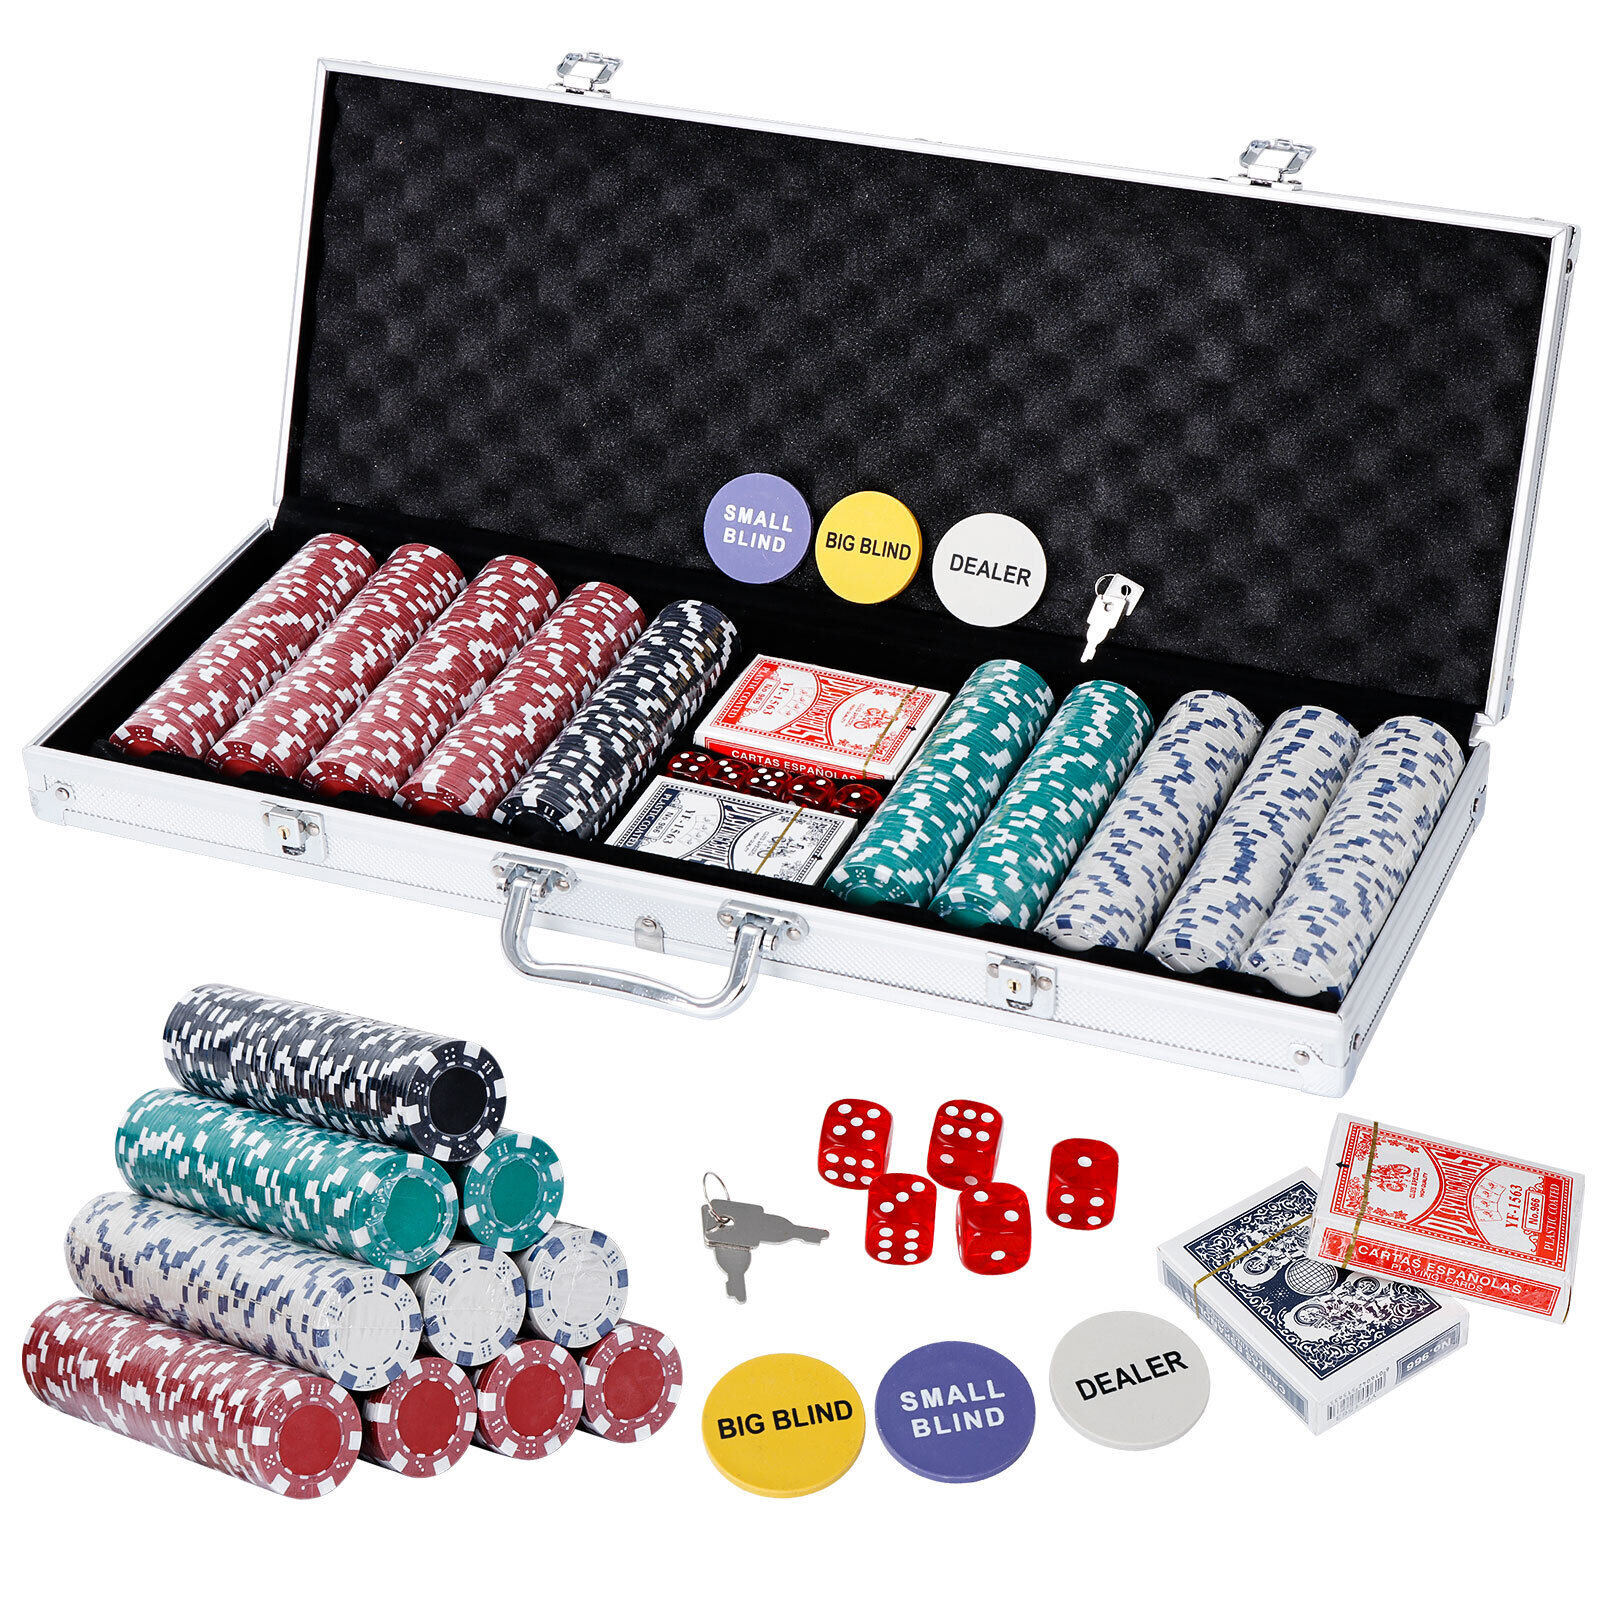 500PCS Chips Poker Dice Chip Texas Blackjack Cards Game Aluminum Case 11.5 Gram